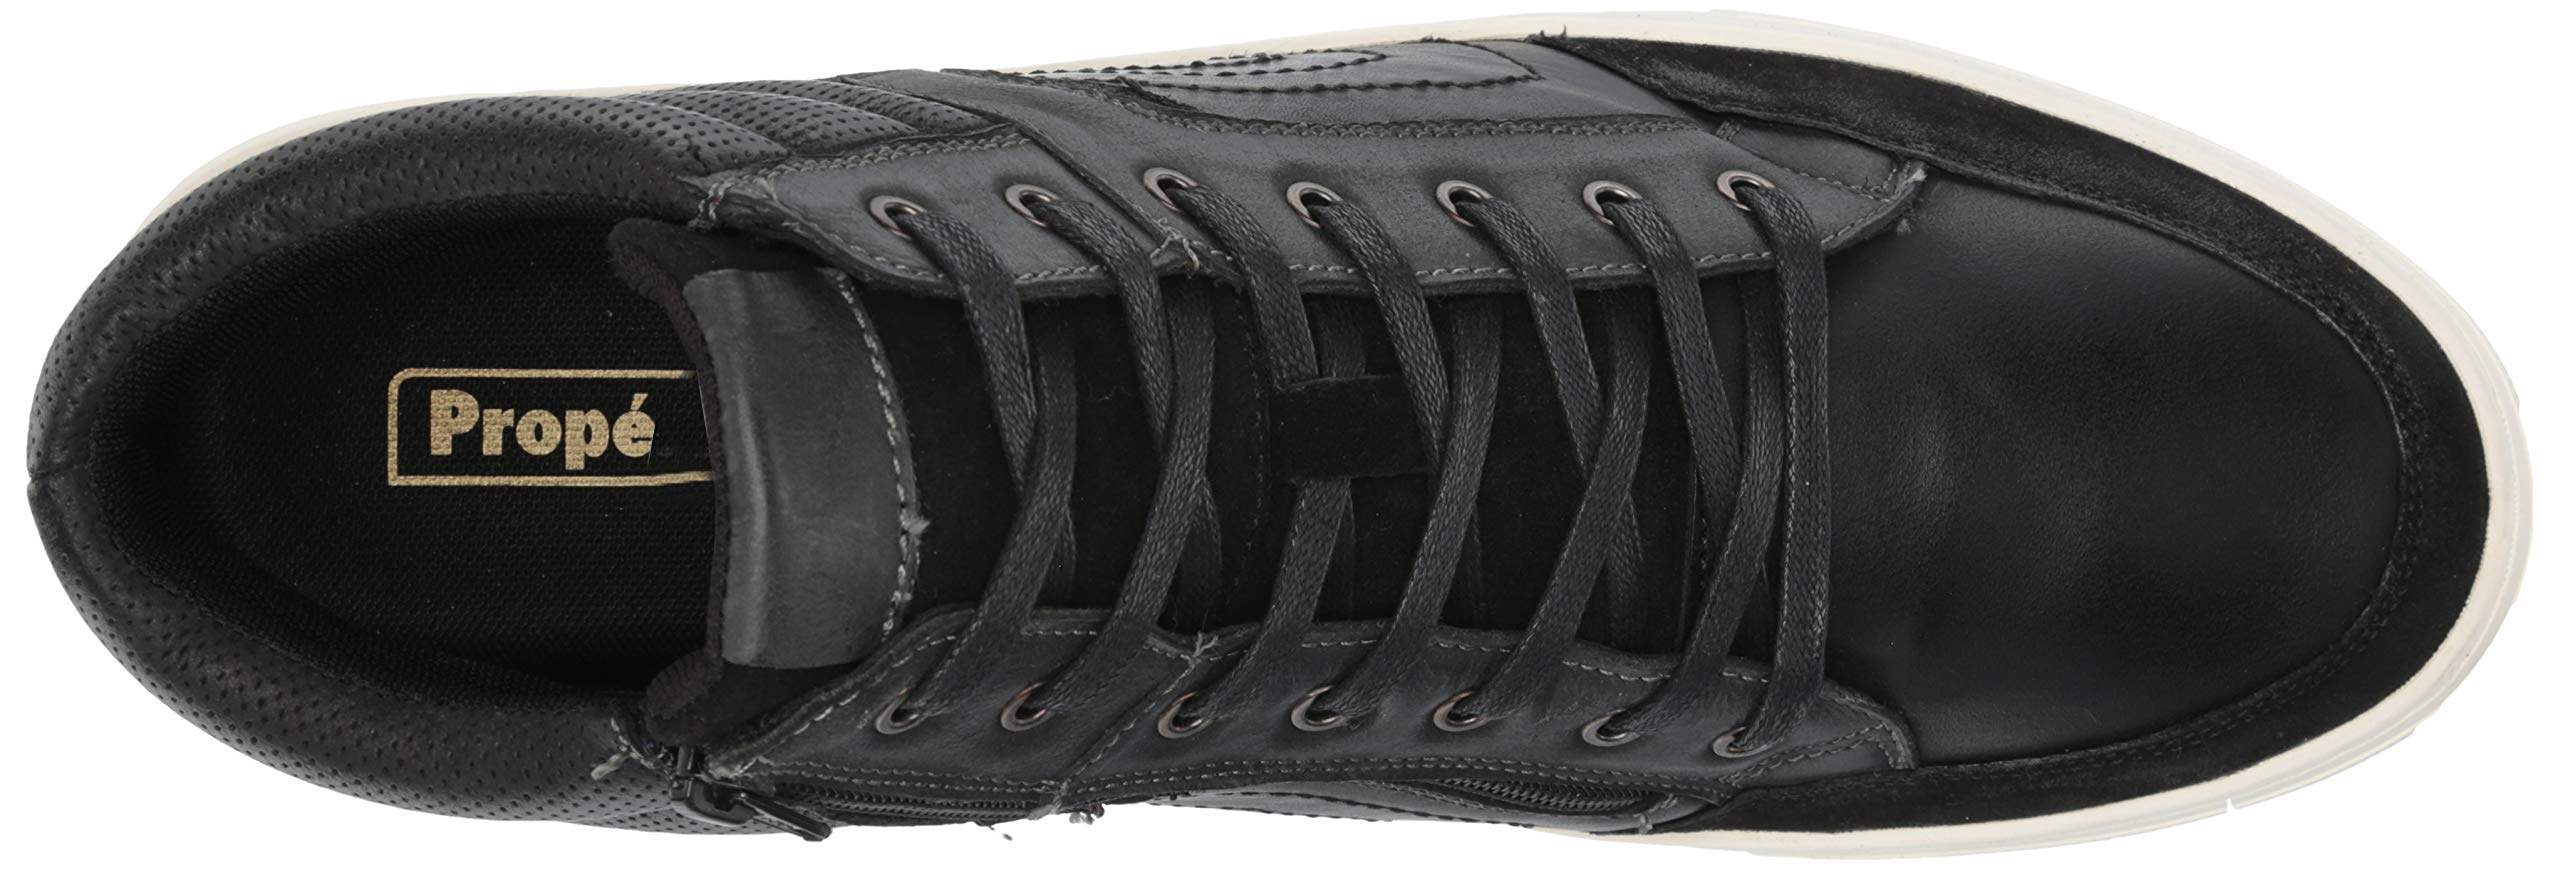 Propet Mens Kenton High Sneakers Casual Shoes Casual - Black